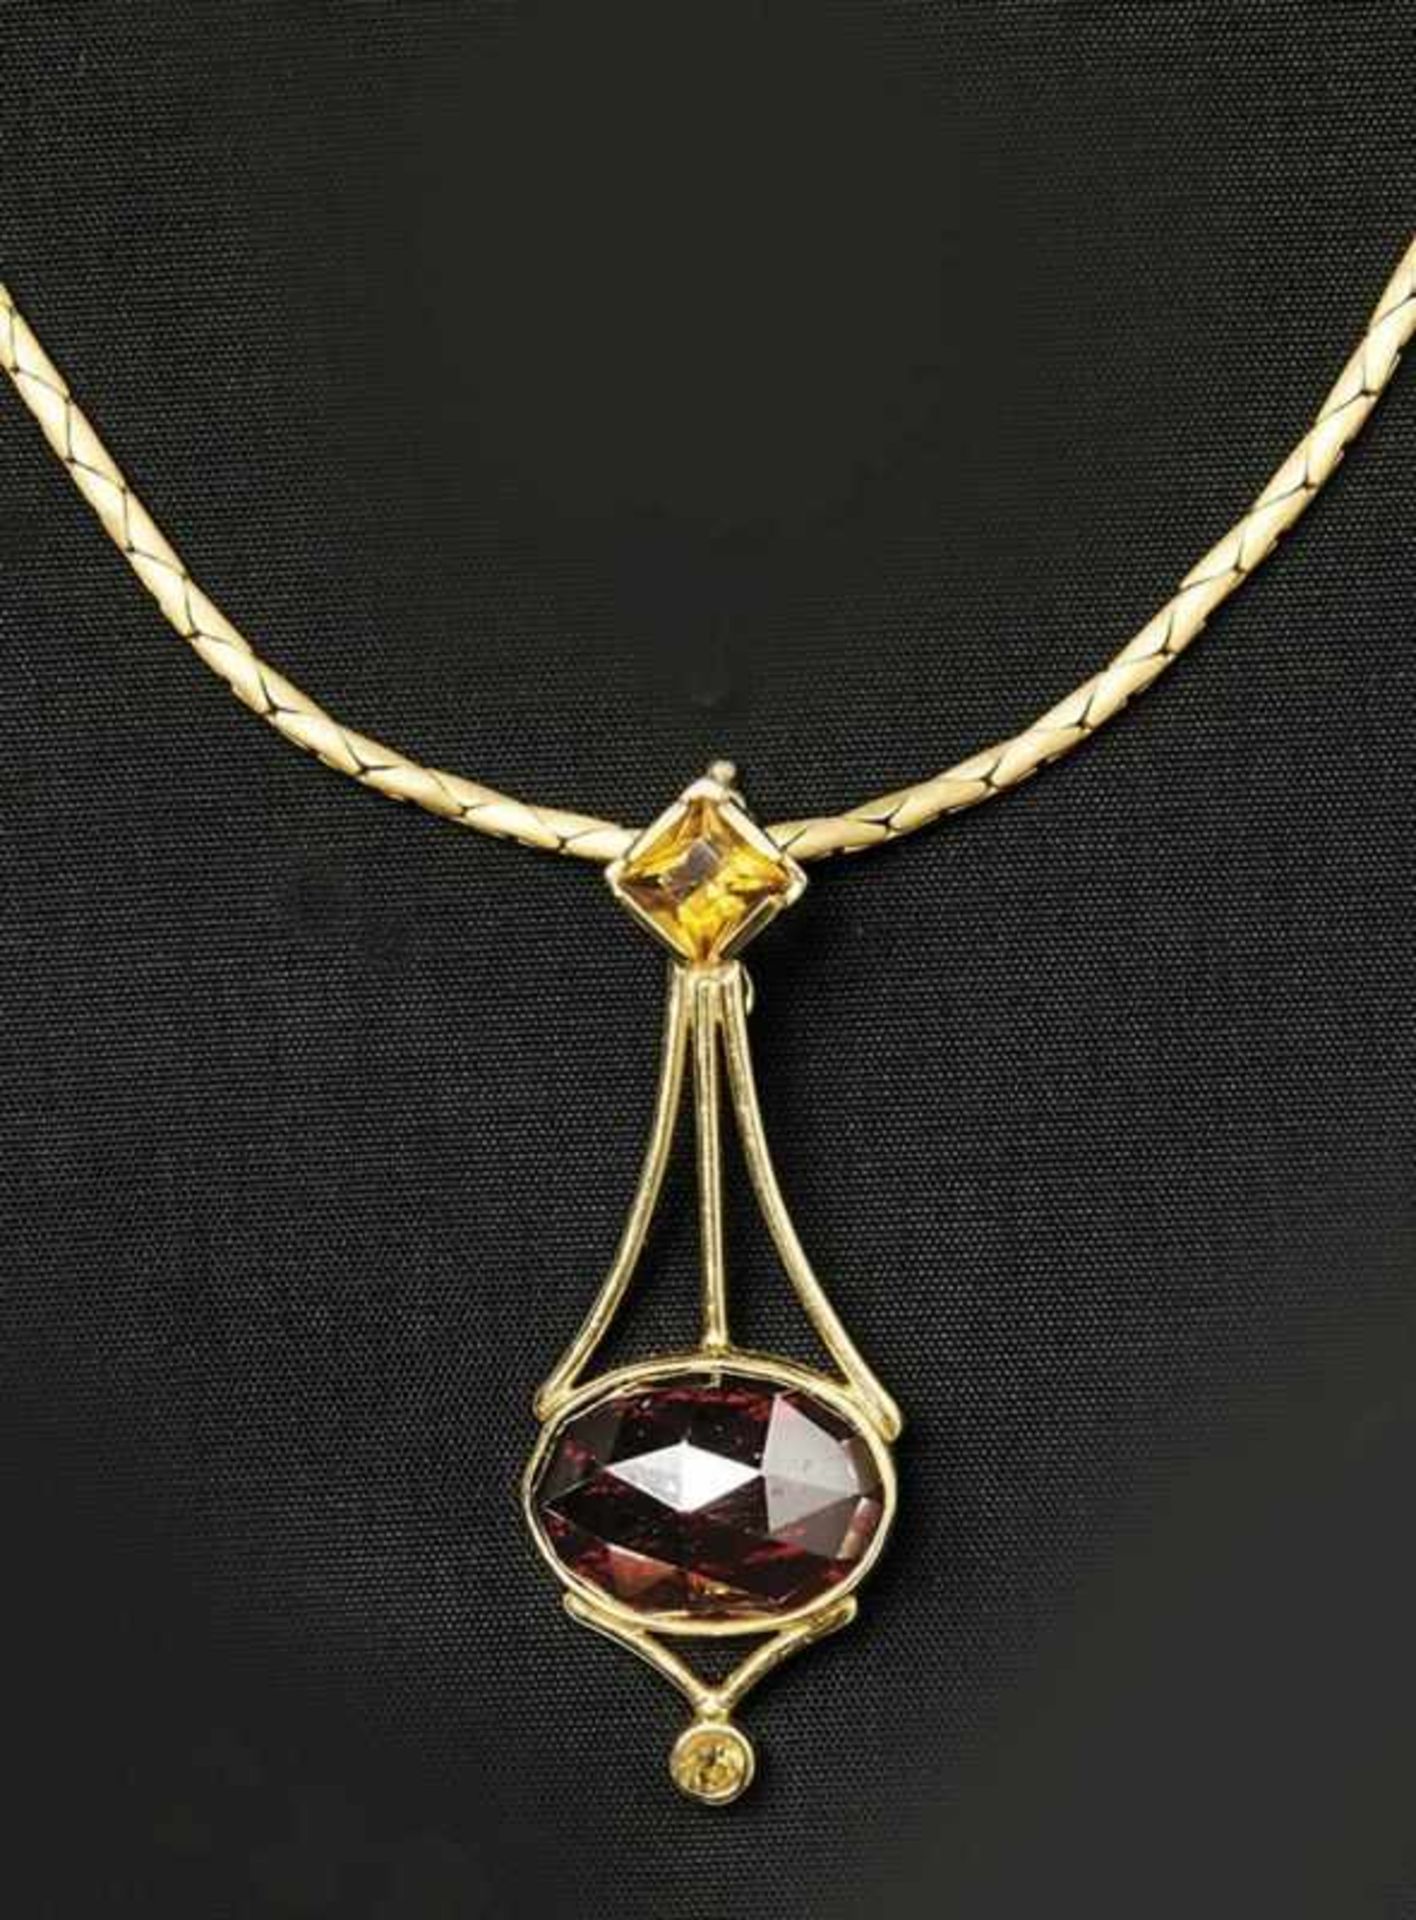 Turmaline trinket with gold necklaceLate 20th C.Gold 14k. Marked. Trinket H. 5 cm, necklace L. 39